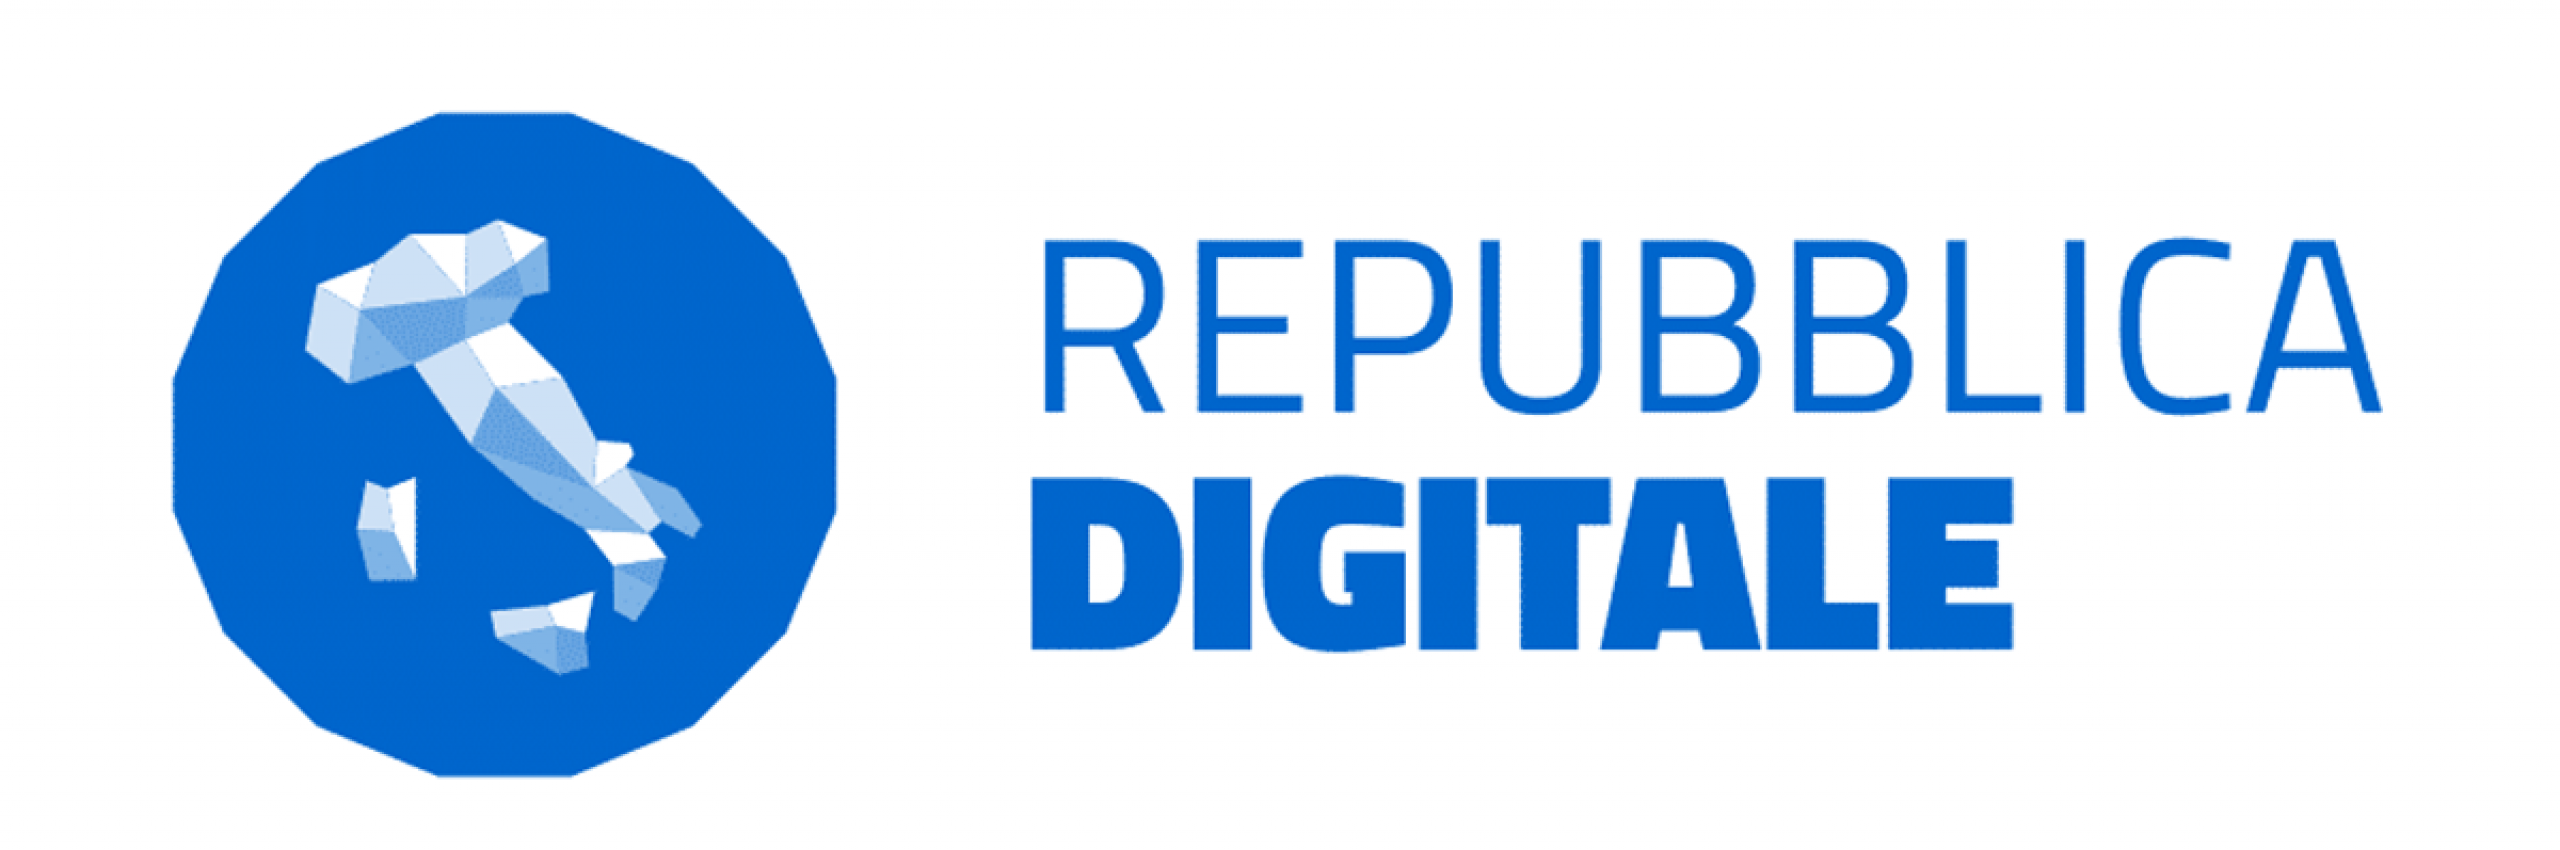 Repubblica digitale